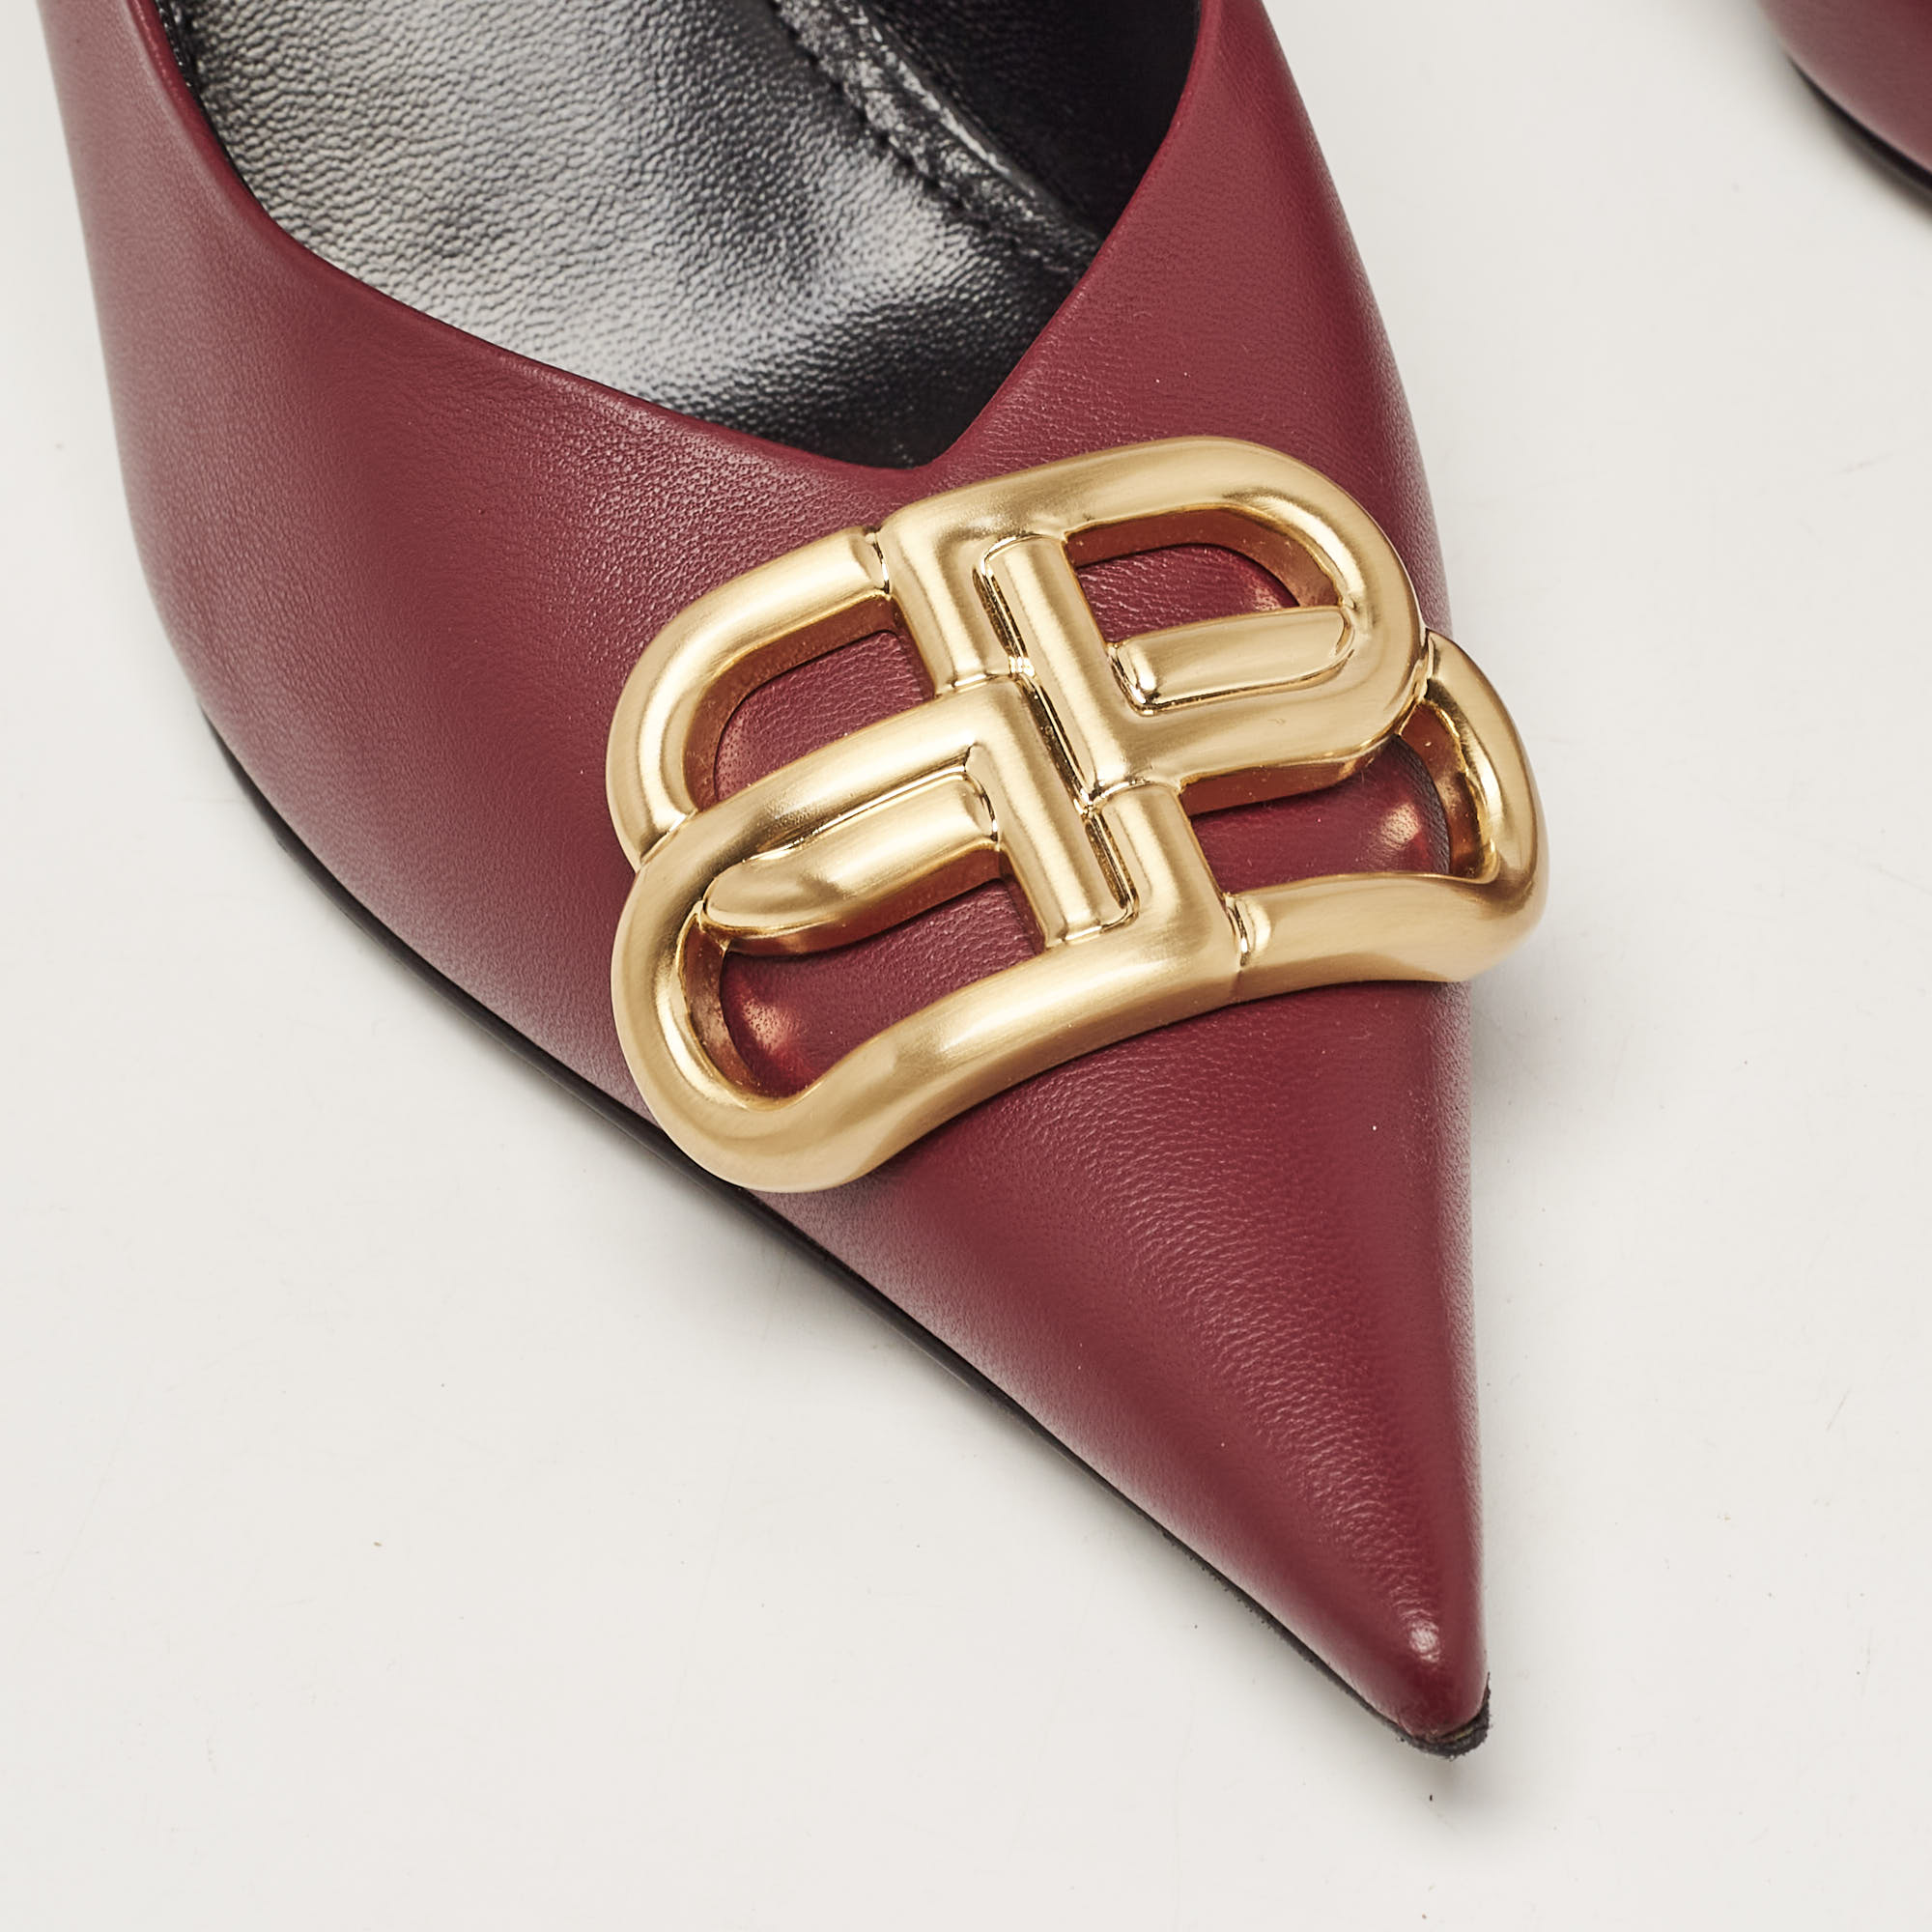 Balenciaga Burgundy Leather Knife Pointed Toe Pumps Size 38